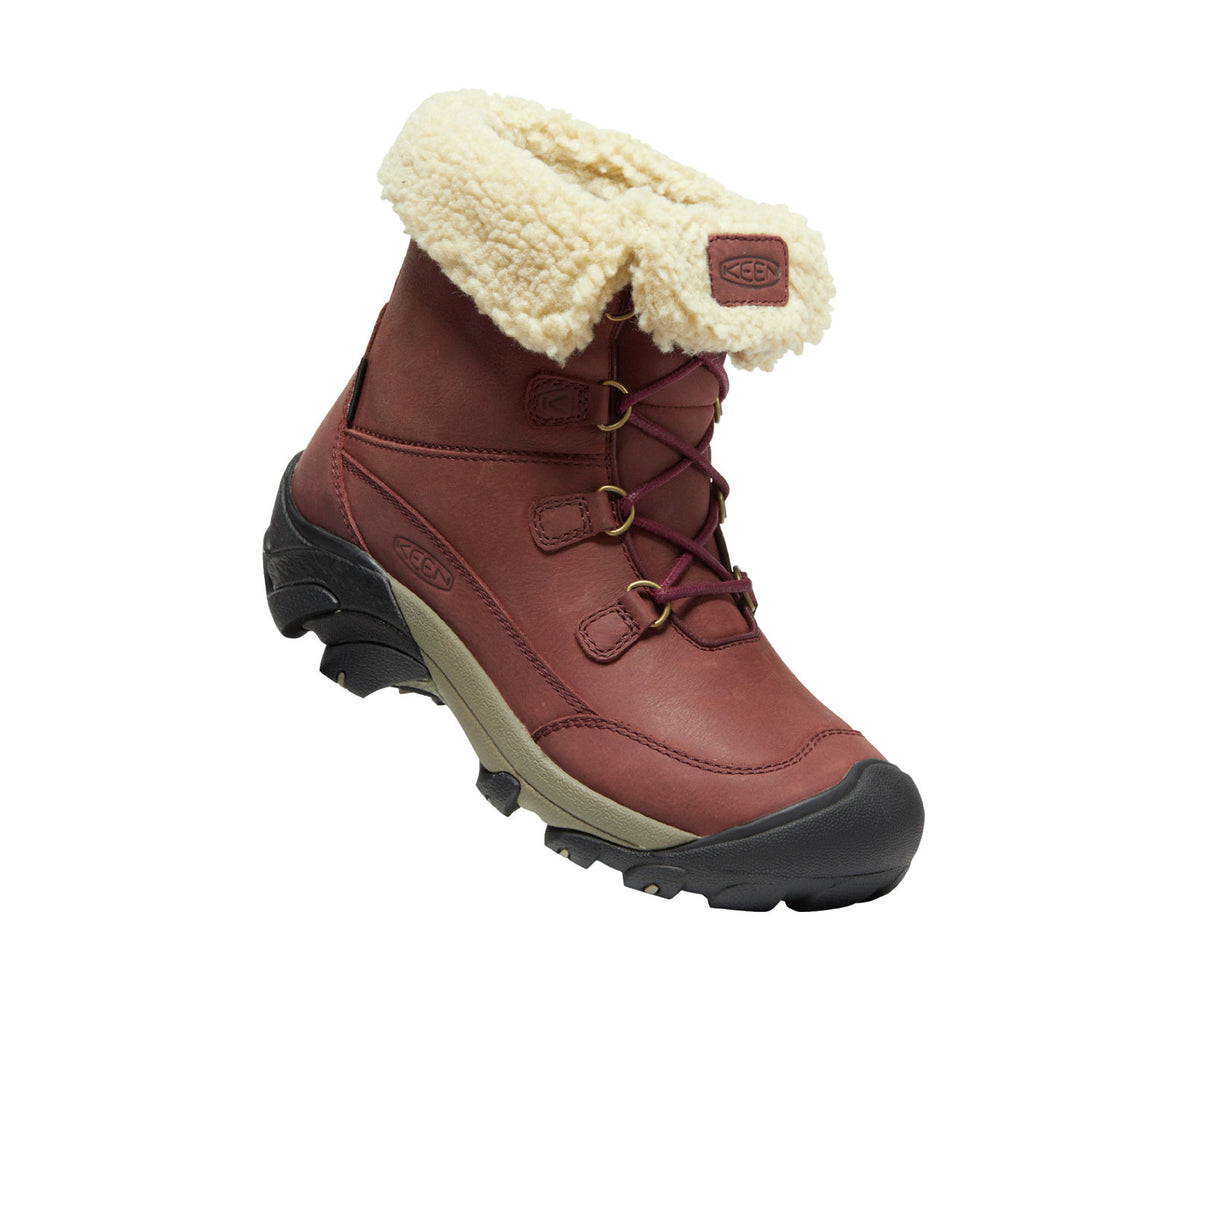 Keen Betty Short Waterproof Boot (Women) - Burgundy/Brindle Boots - Winter - Mid Boot - The Heel Shoe Fitters